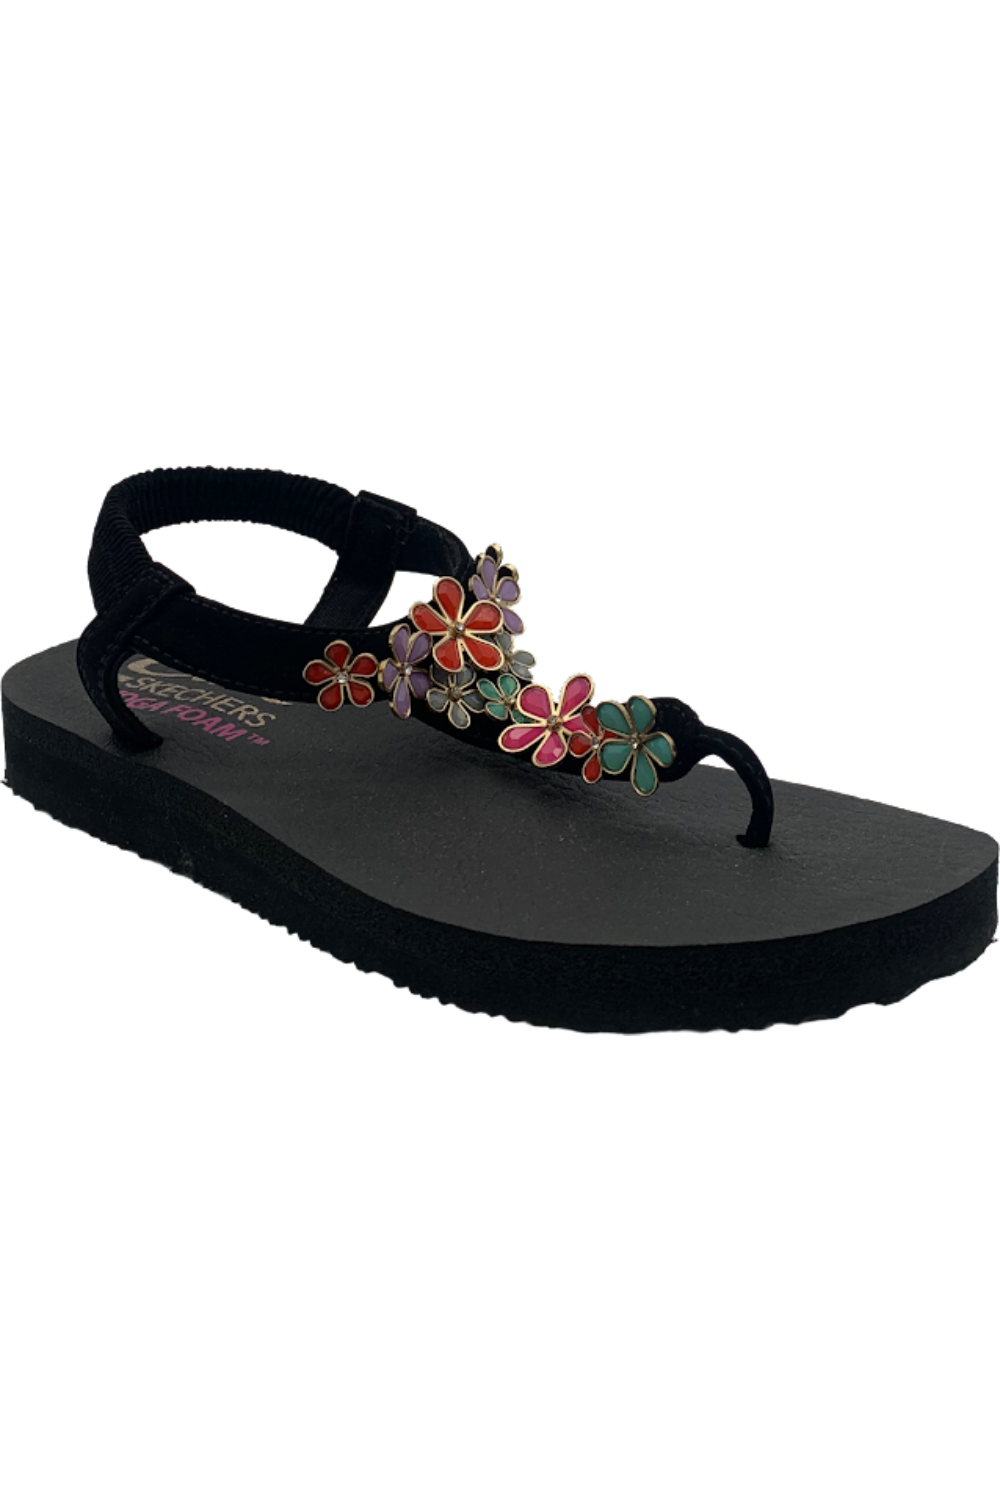 Skechers Womens/Ladies Meditation Sandals | Discounts on great Brands